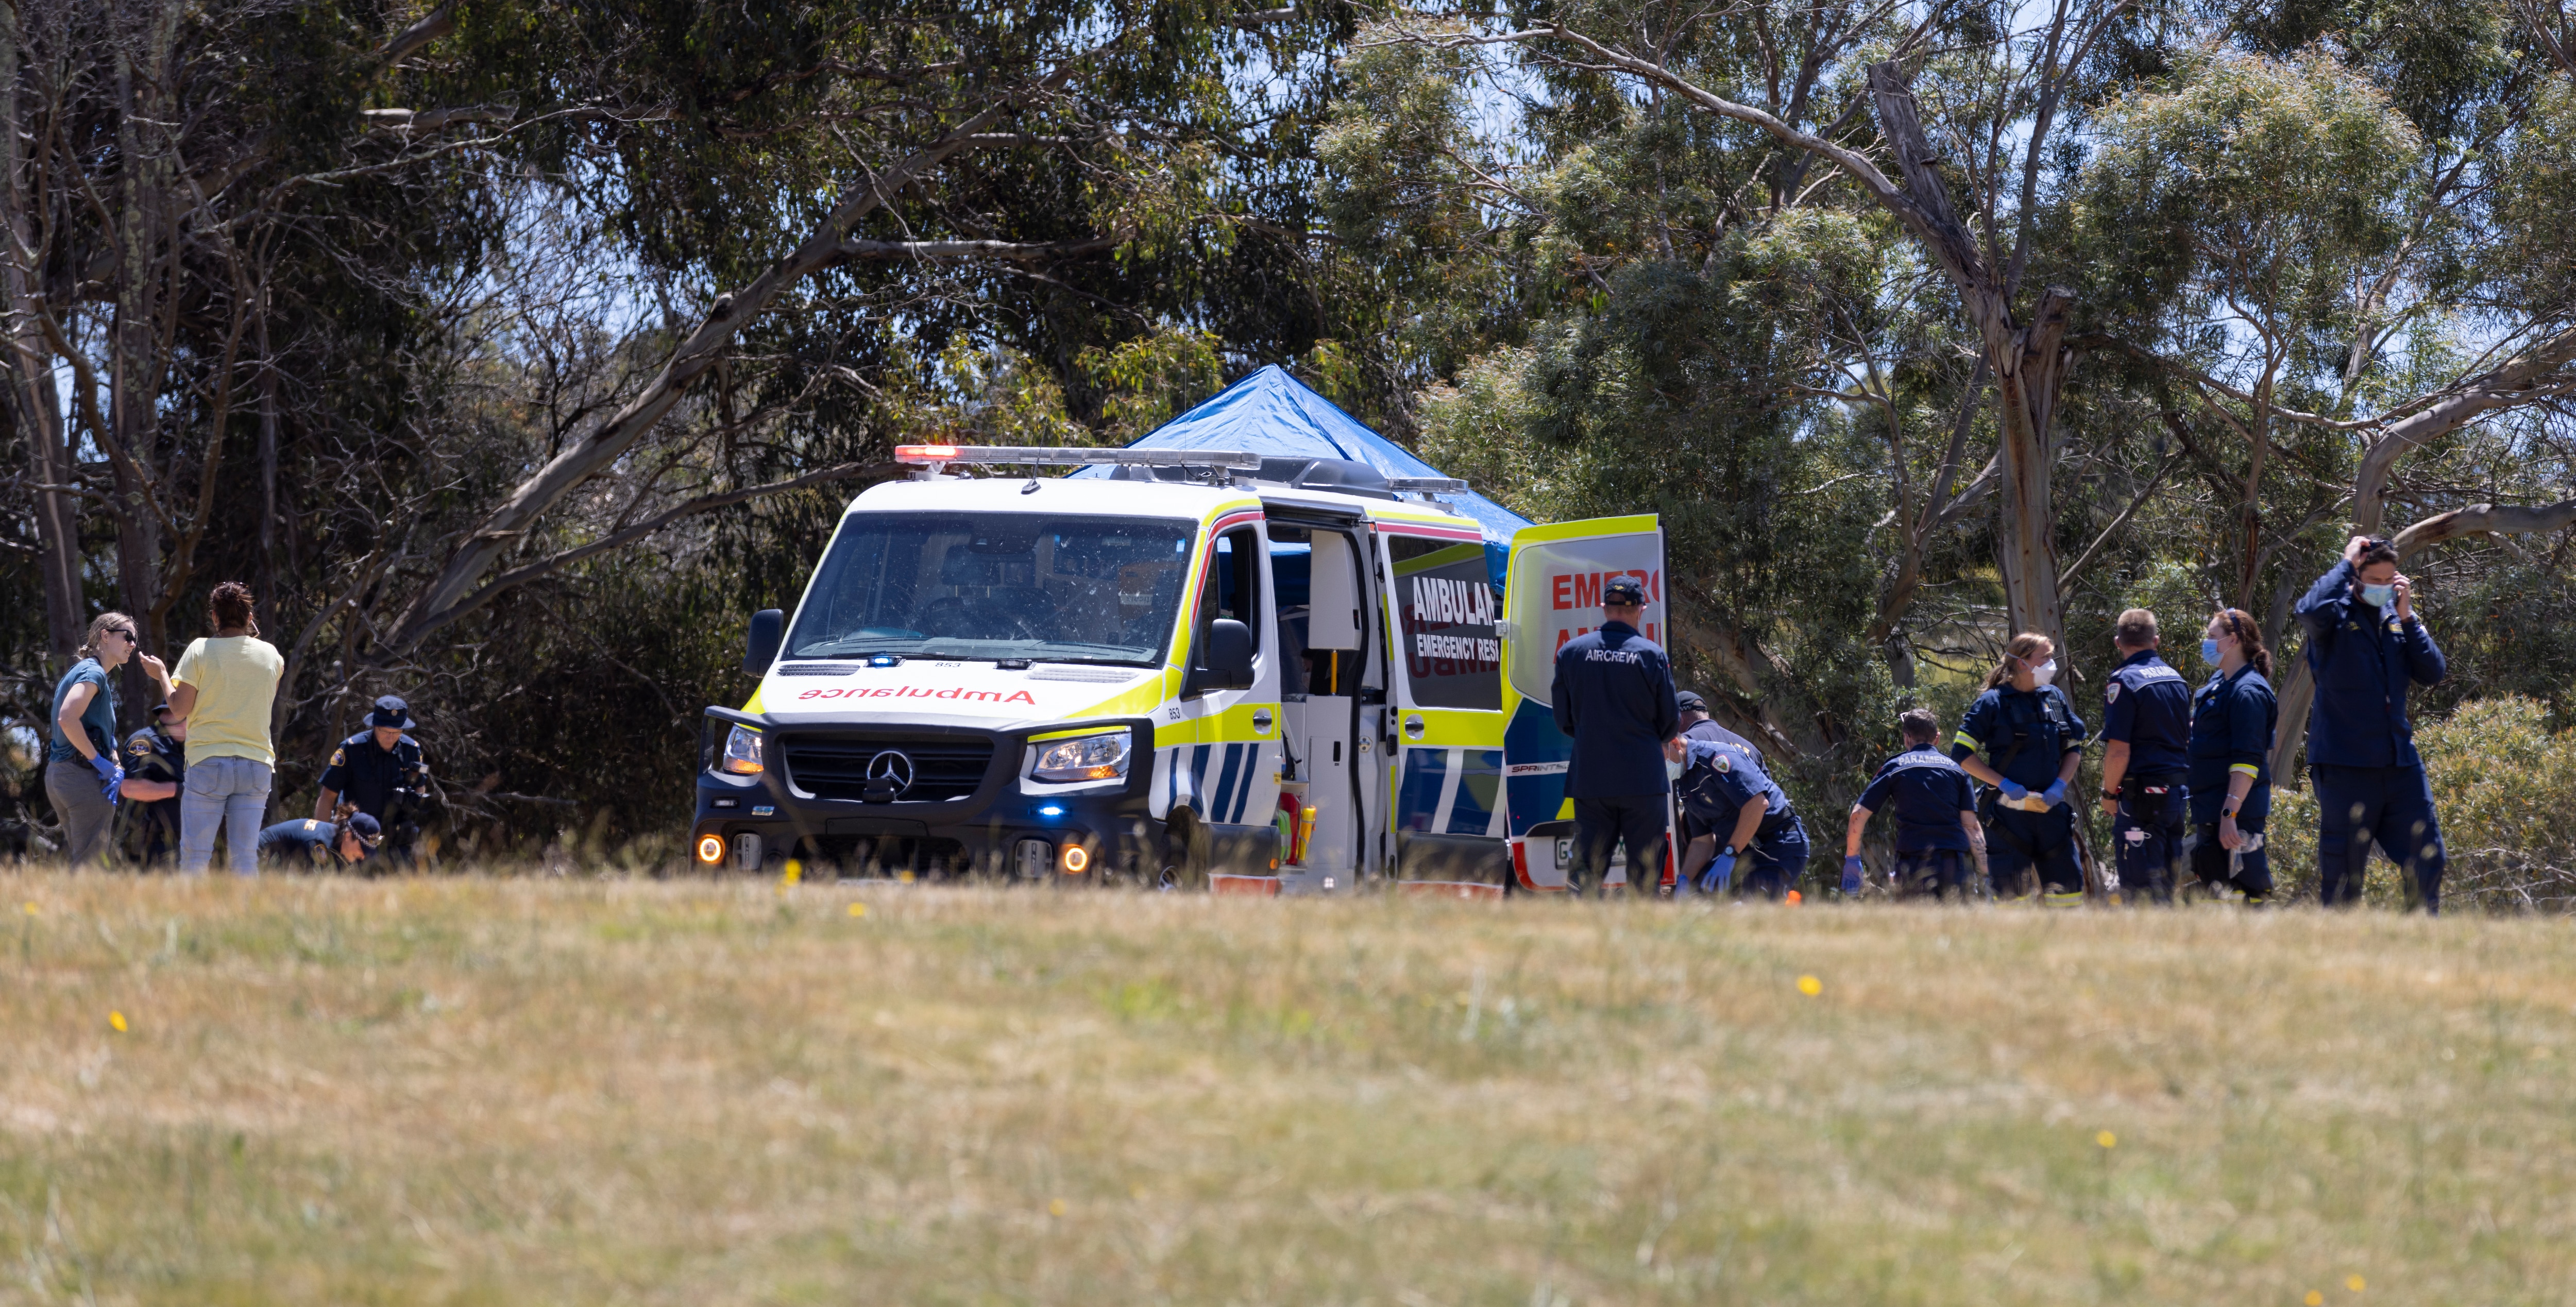 Emergency services personnel on scene at Hillcrest Primary School in Devonport, Tasmania.